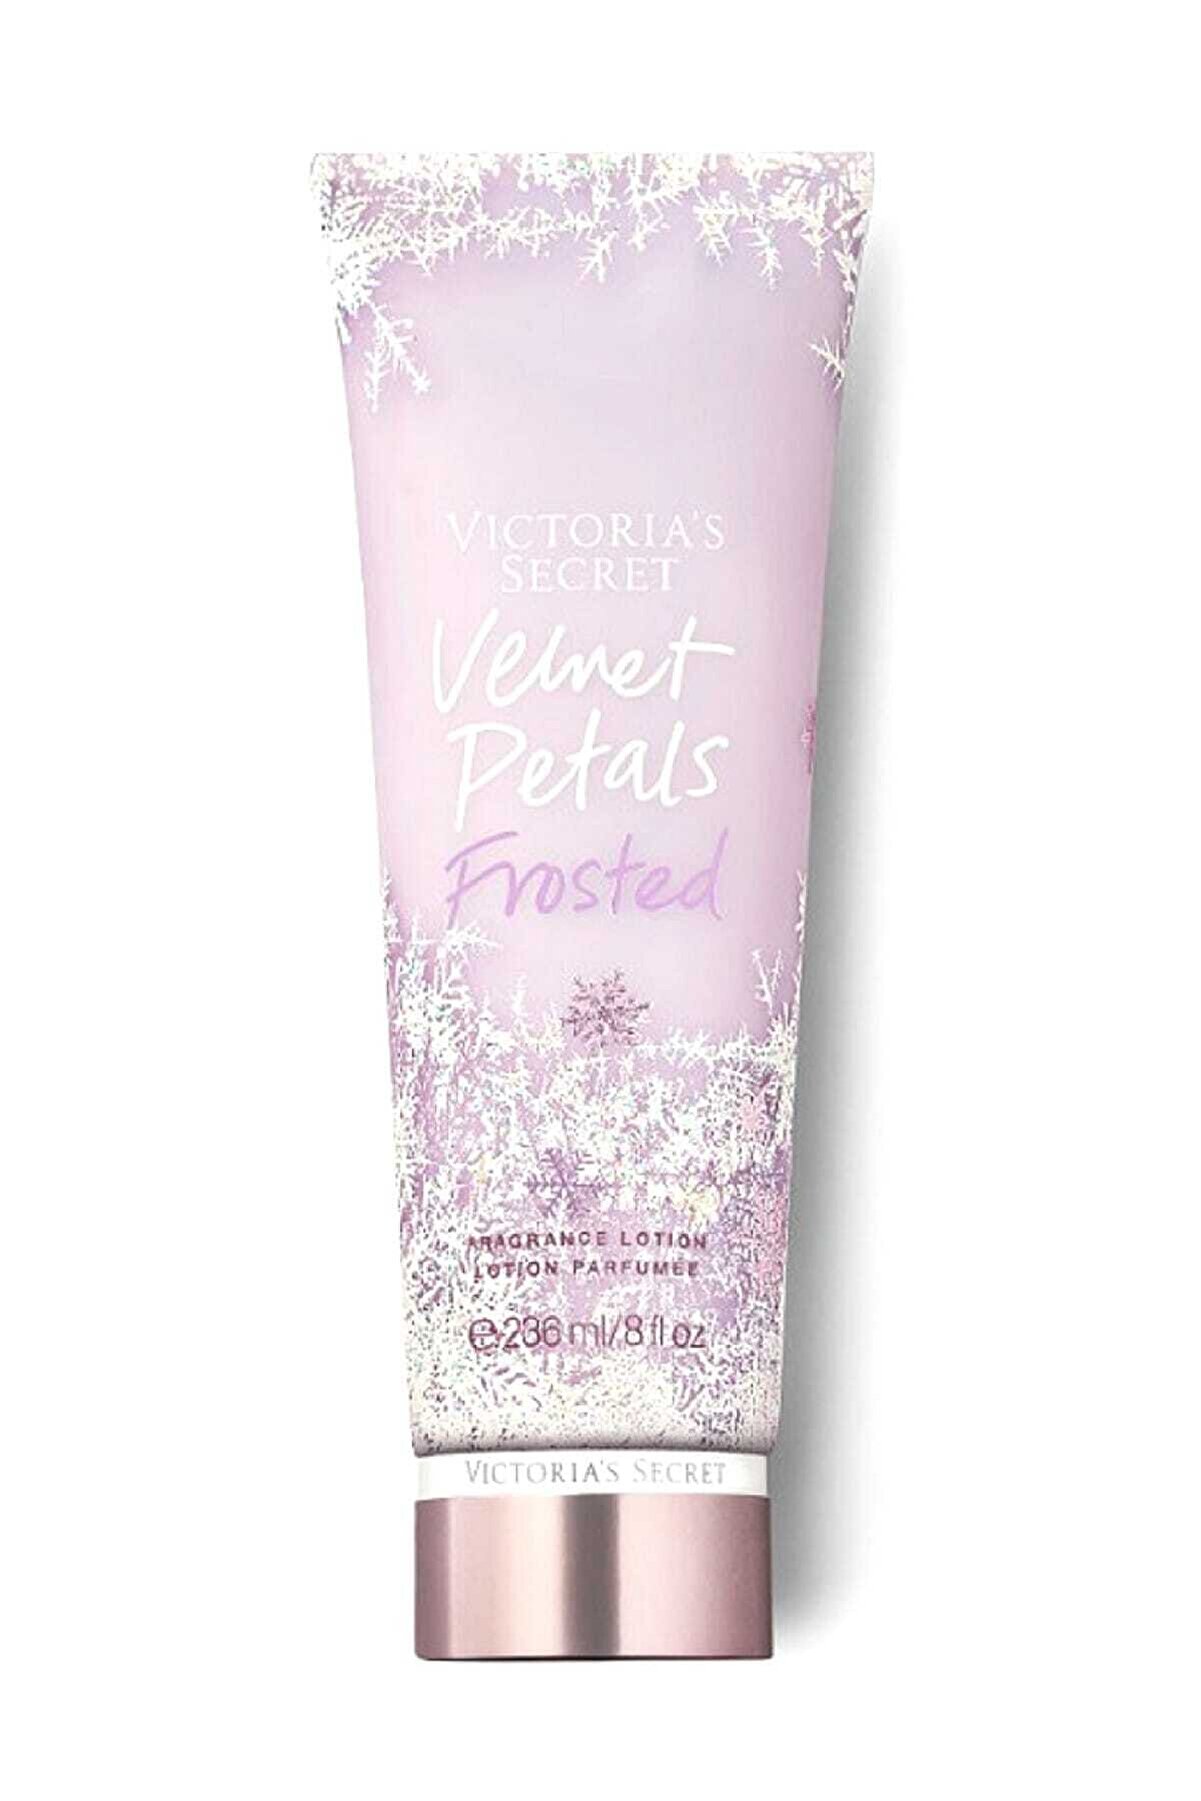 Victoria's Secret Velvet Petals Frosted 236 ml Kadın Vücut Losyonu  667548039048